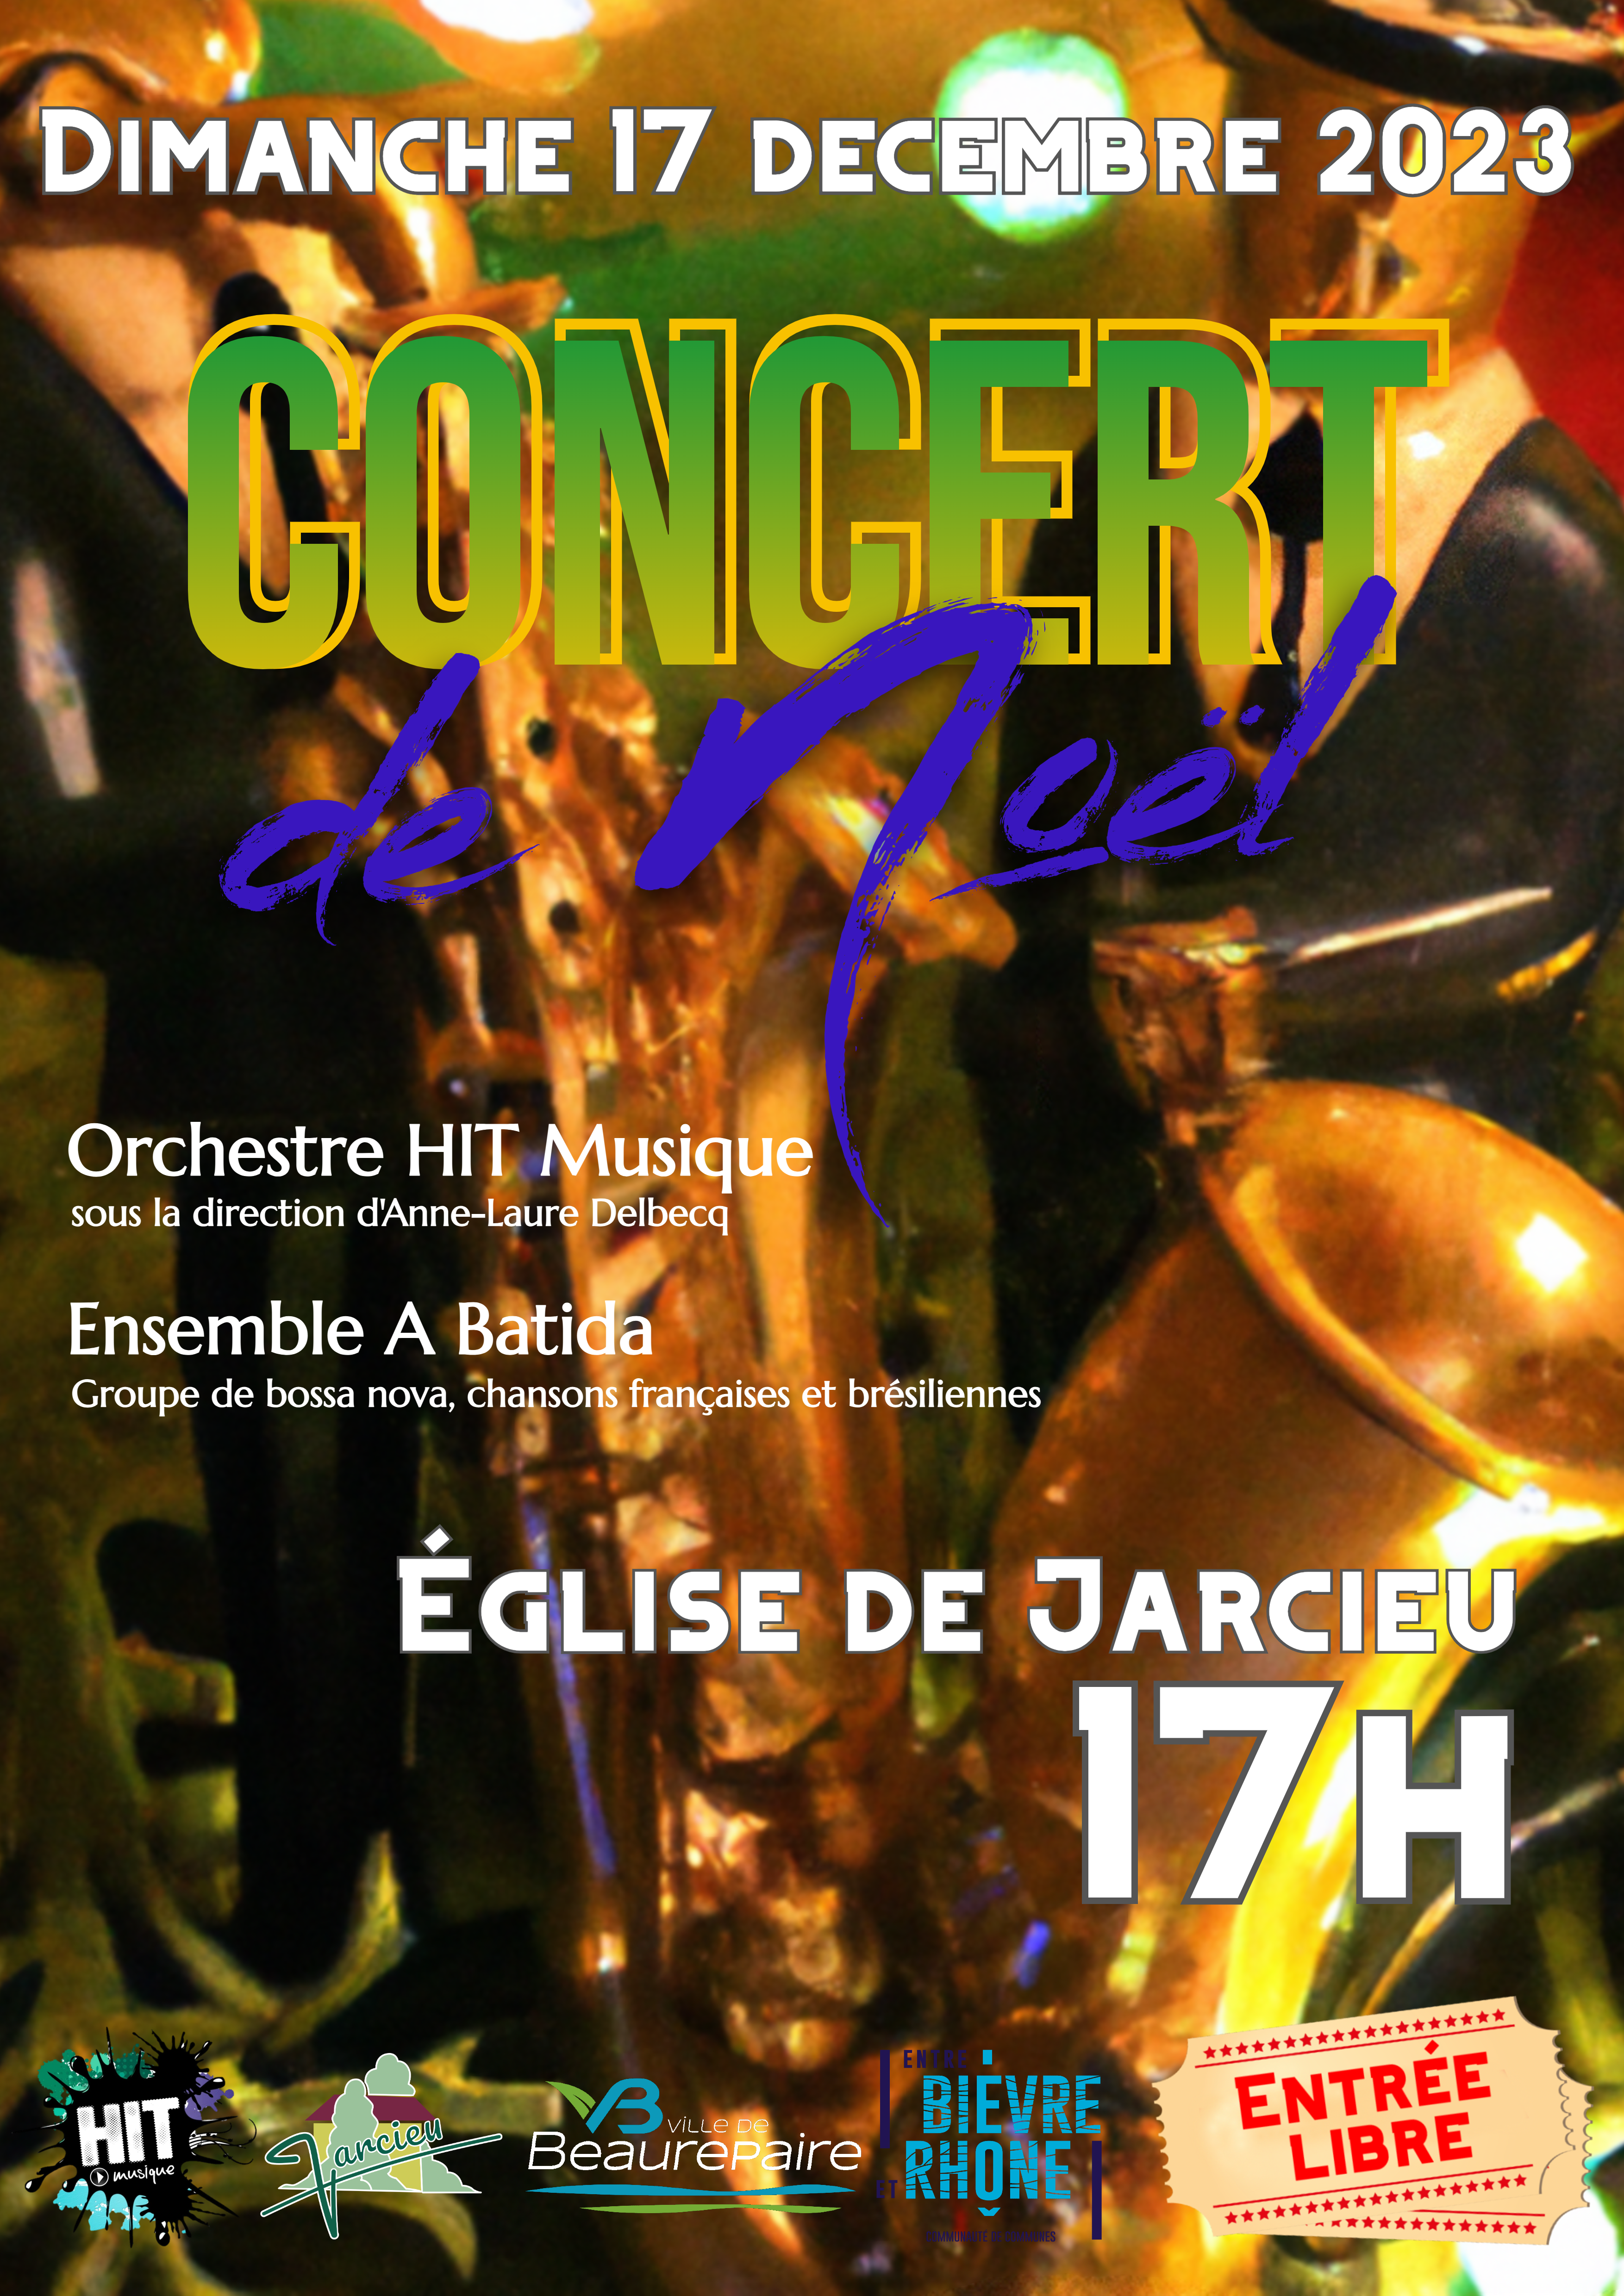 Concert de Noël @ Eglise de Jarcieu